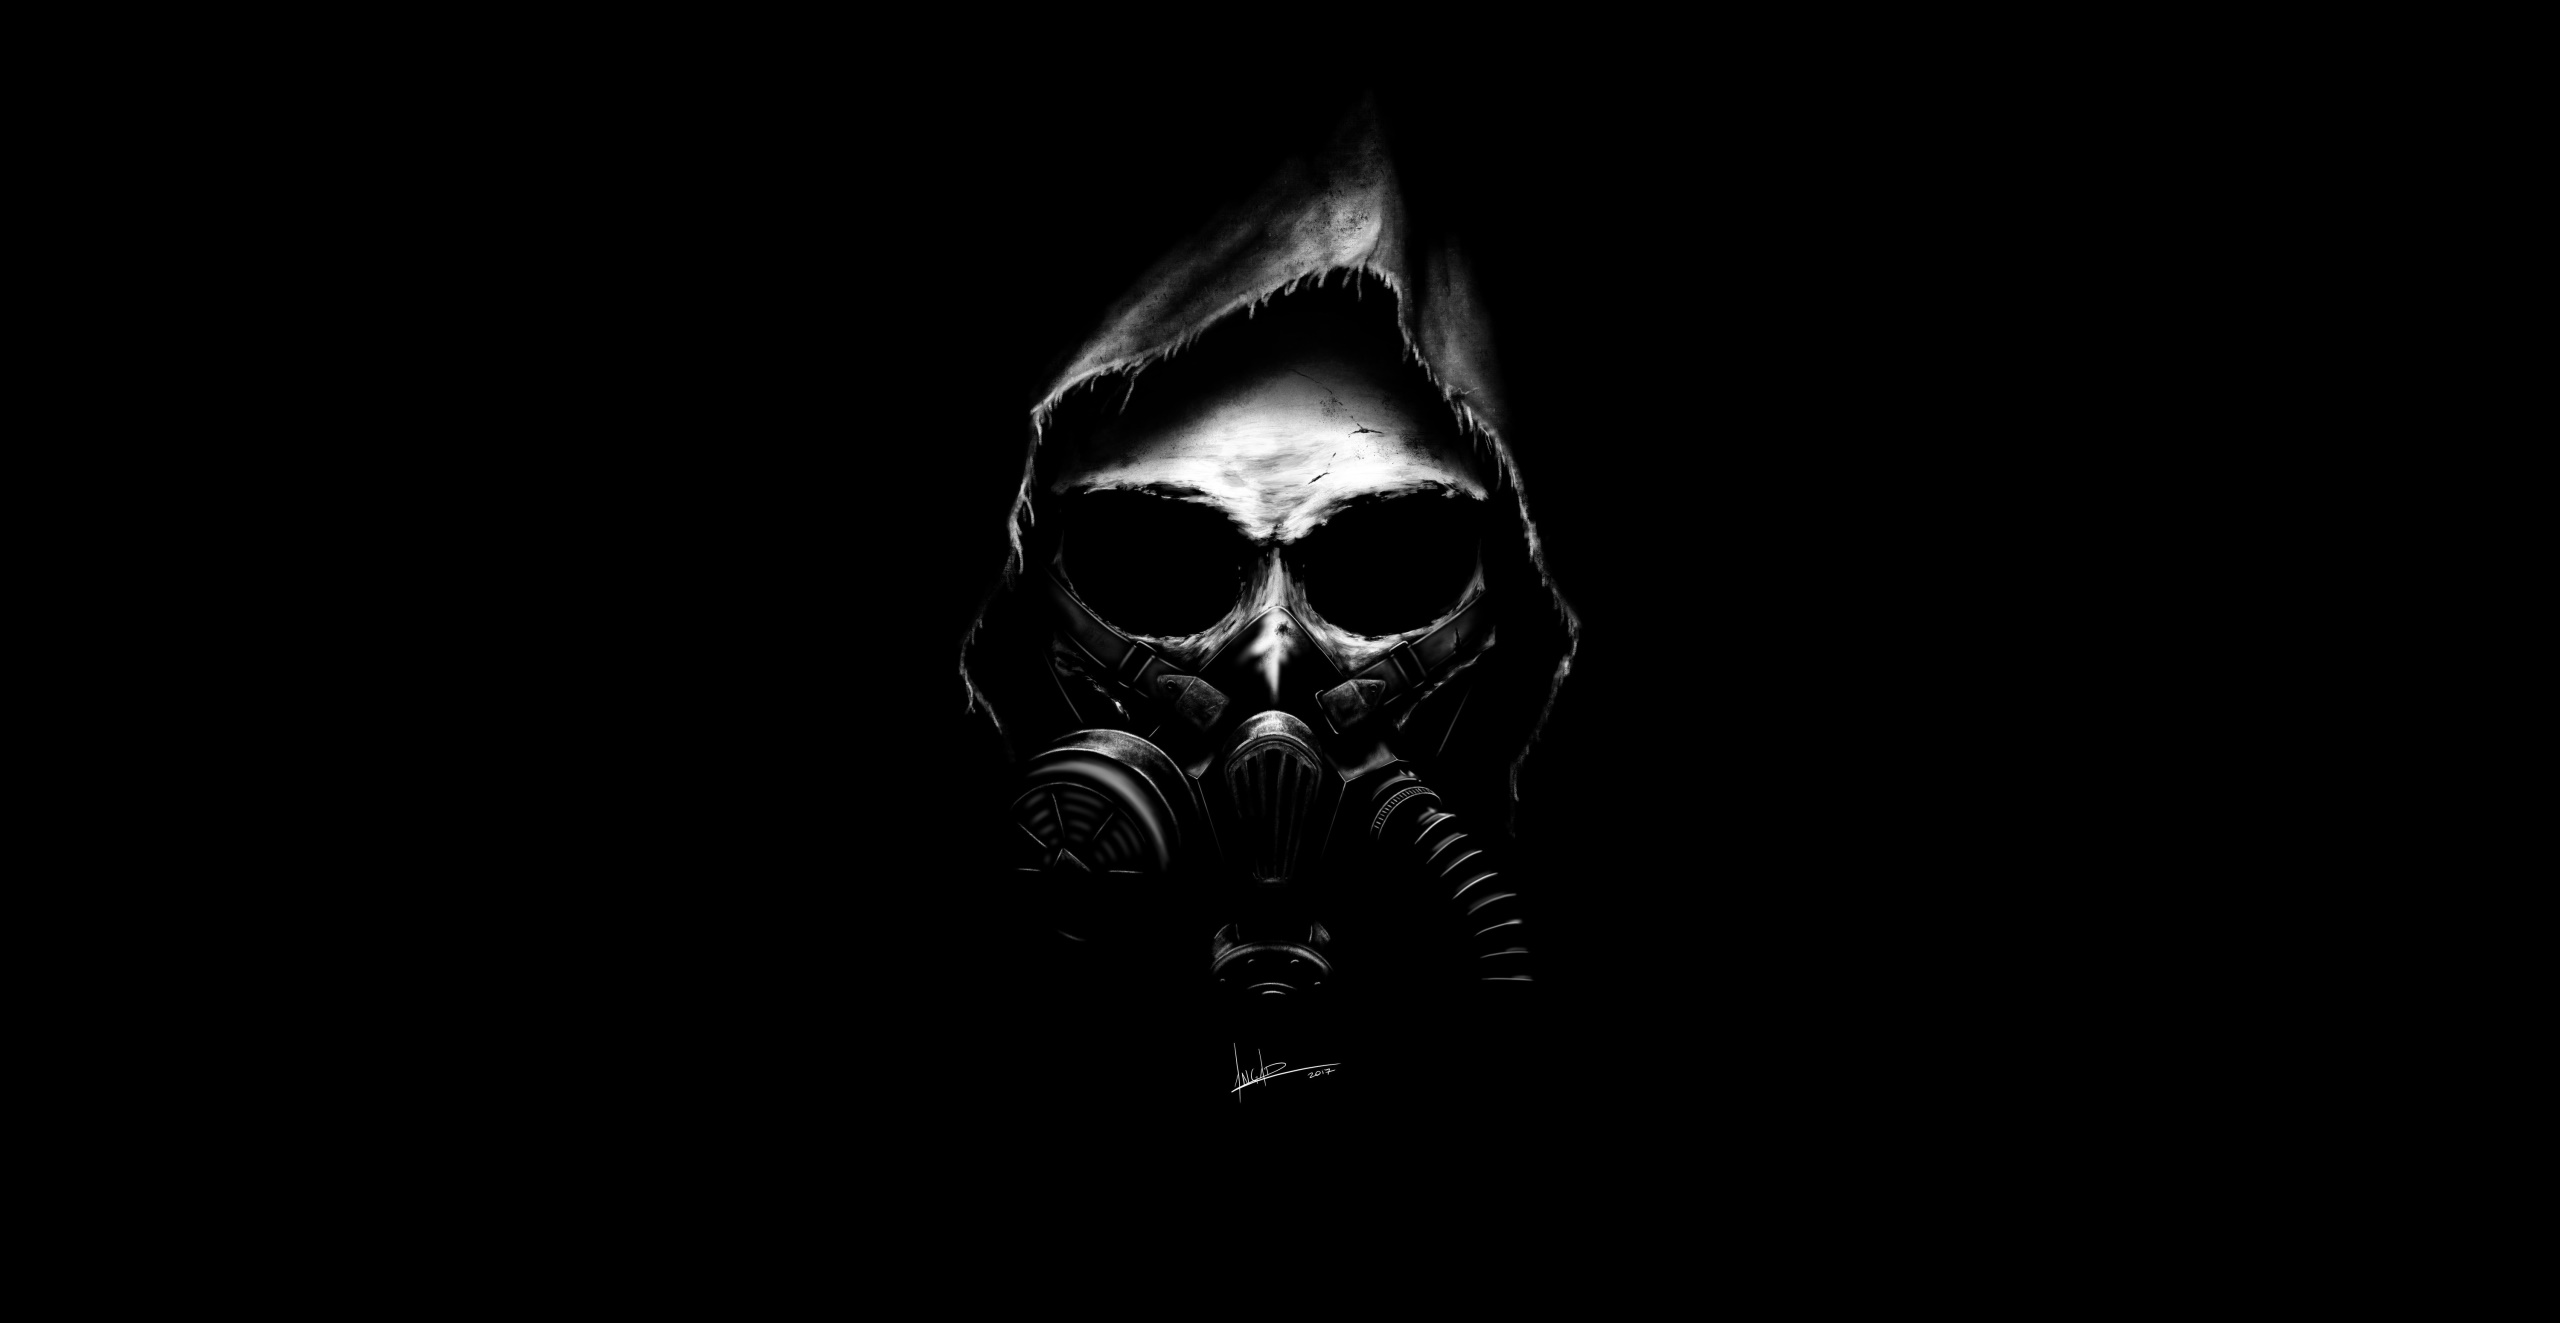 General 2560x1323 2017 (Year) skull dark artwork gas masks